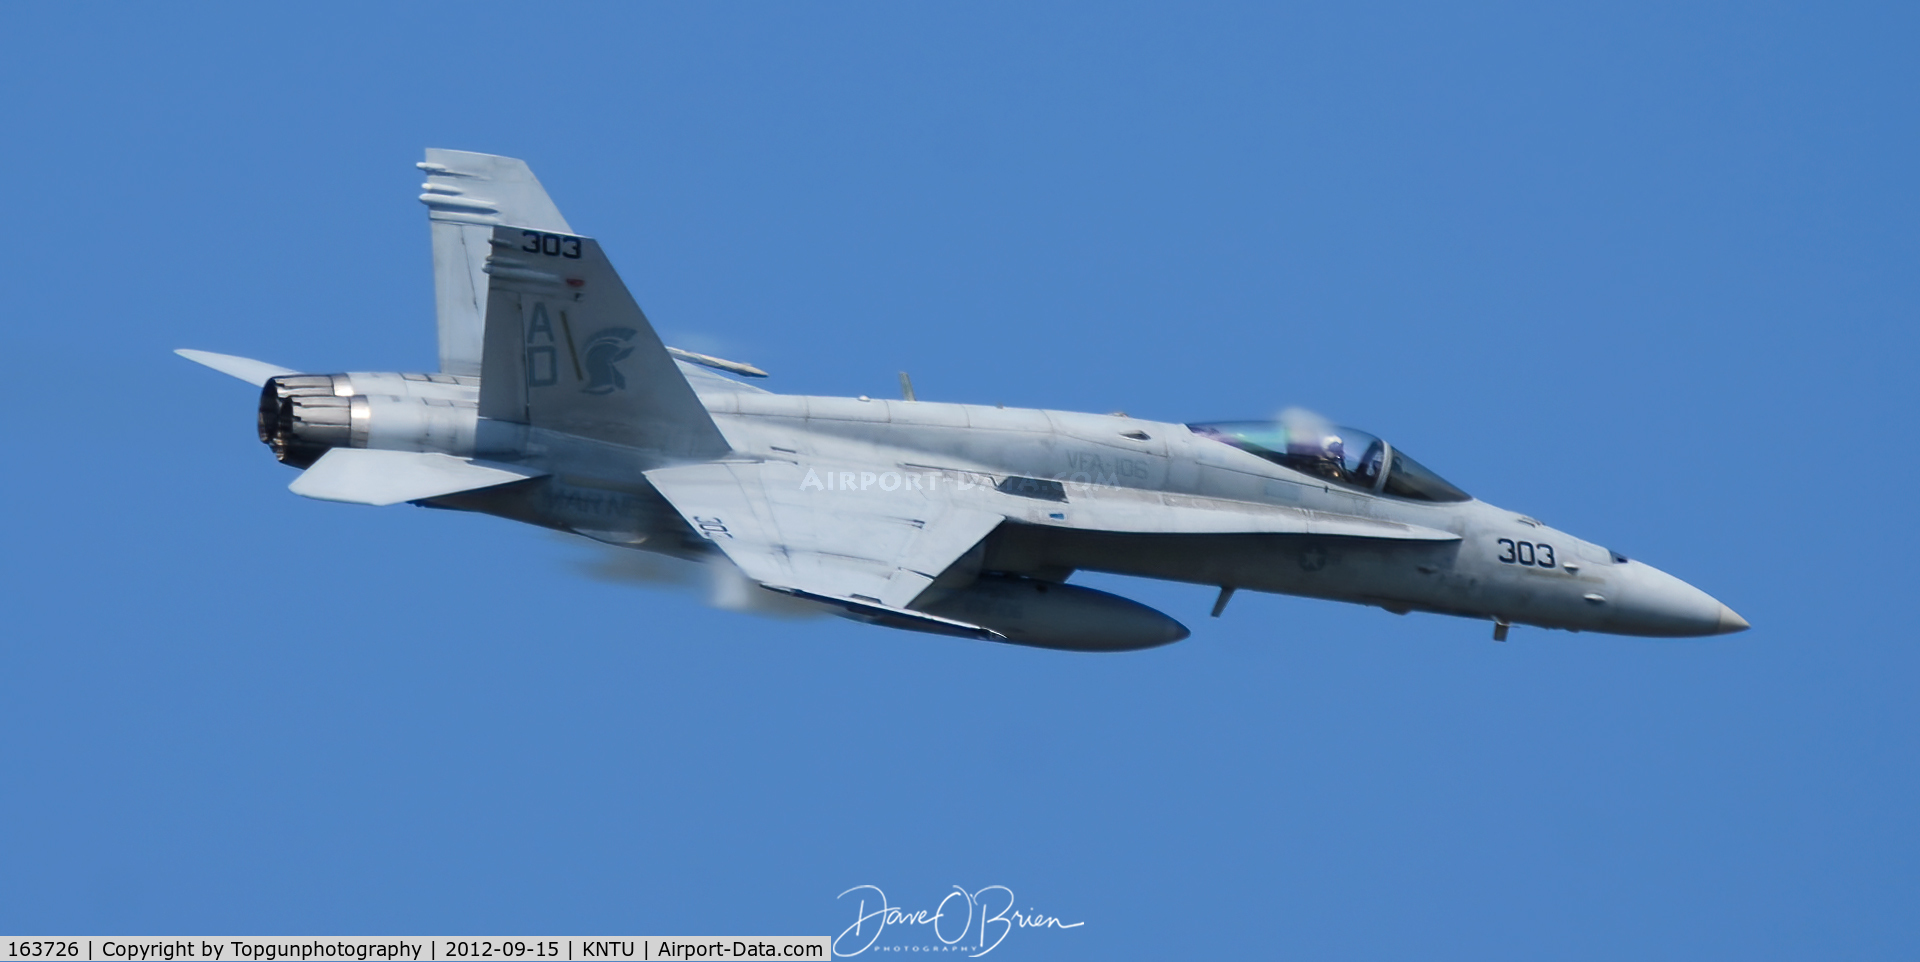 163726, 1989 McDonnell Douglas F/A-18C Hornet C/N 0793/C086, Fleet Demo photo pass